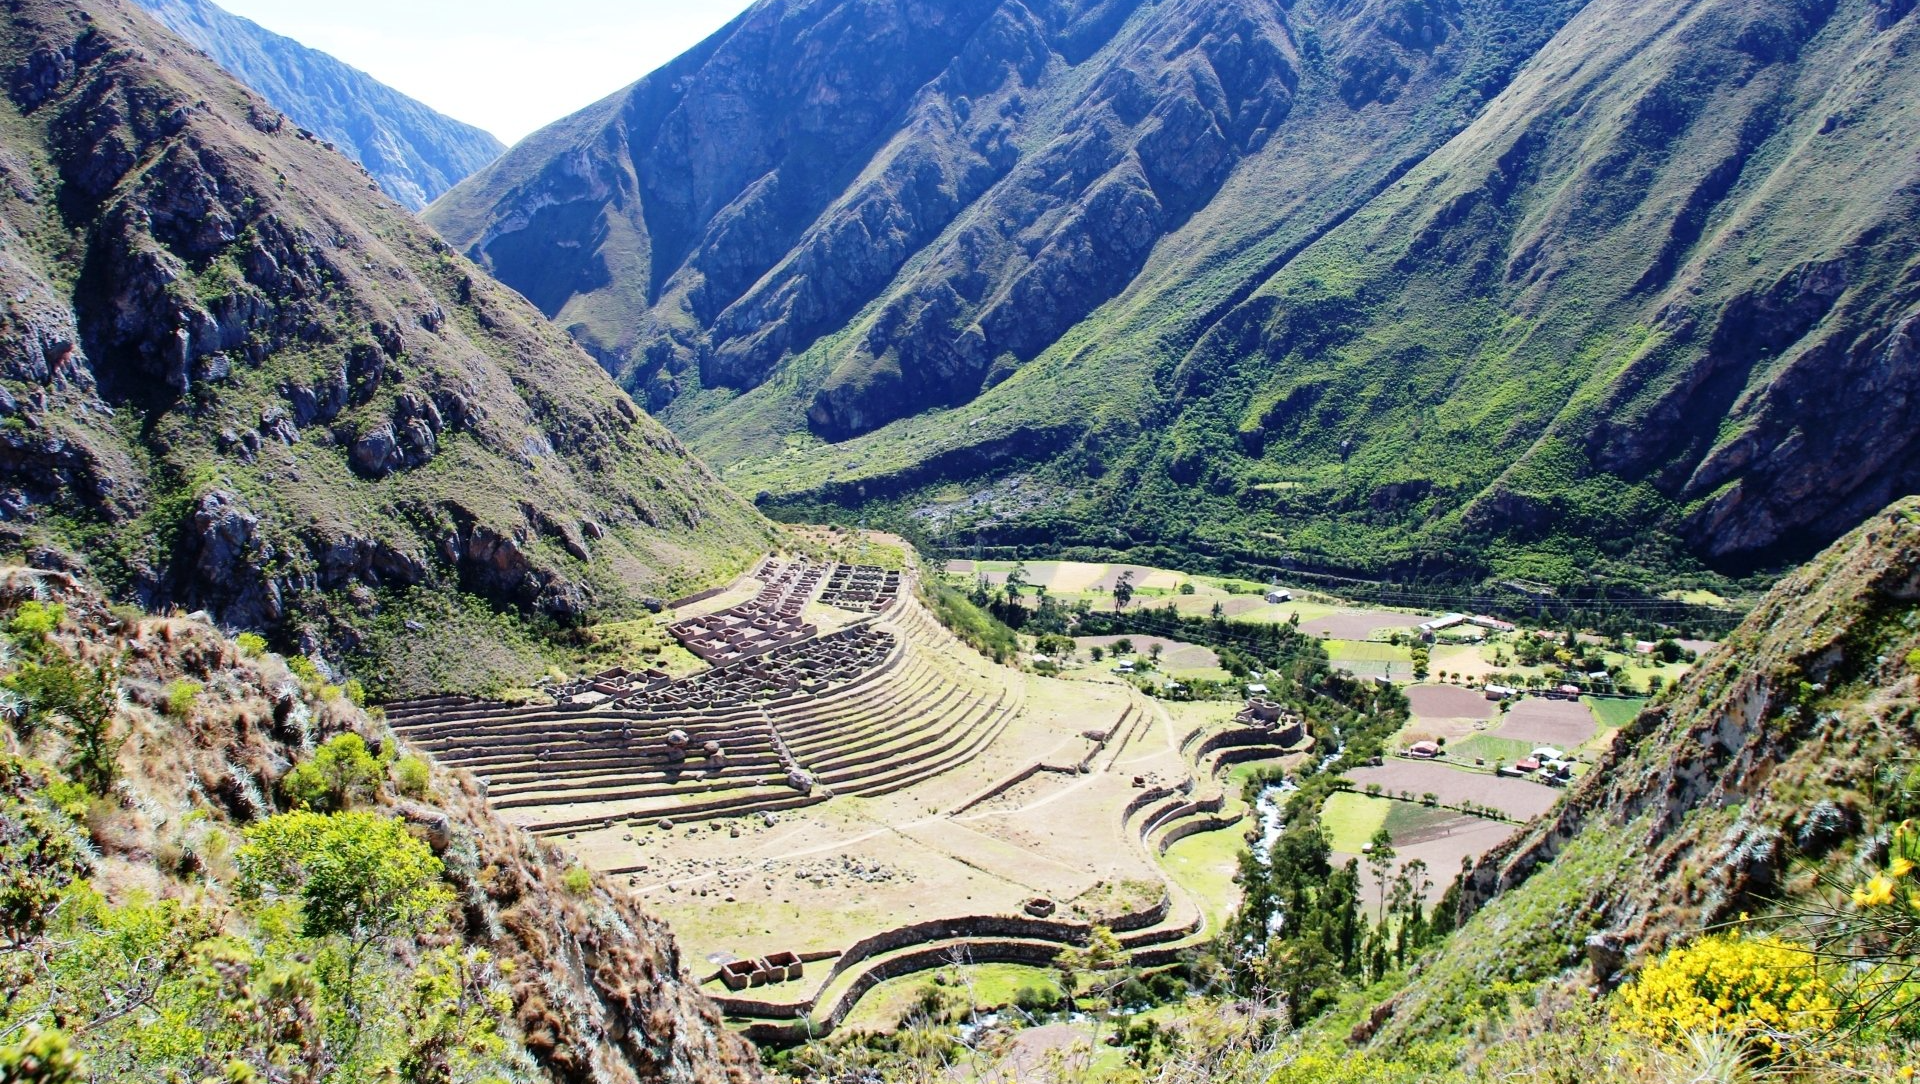 Inca Town: Llactapata